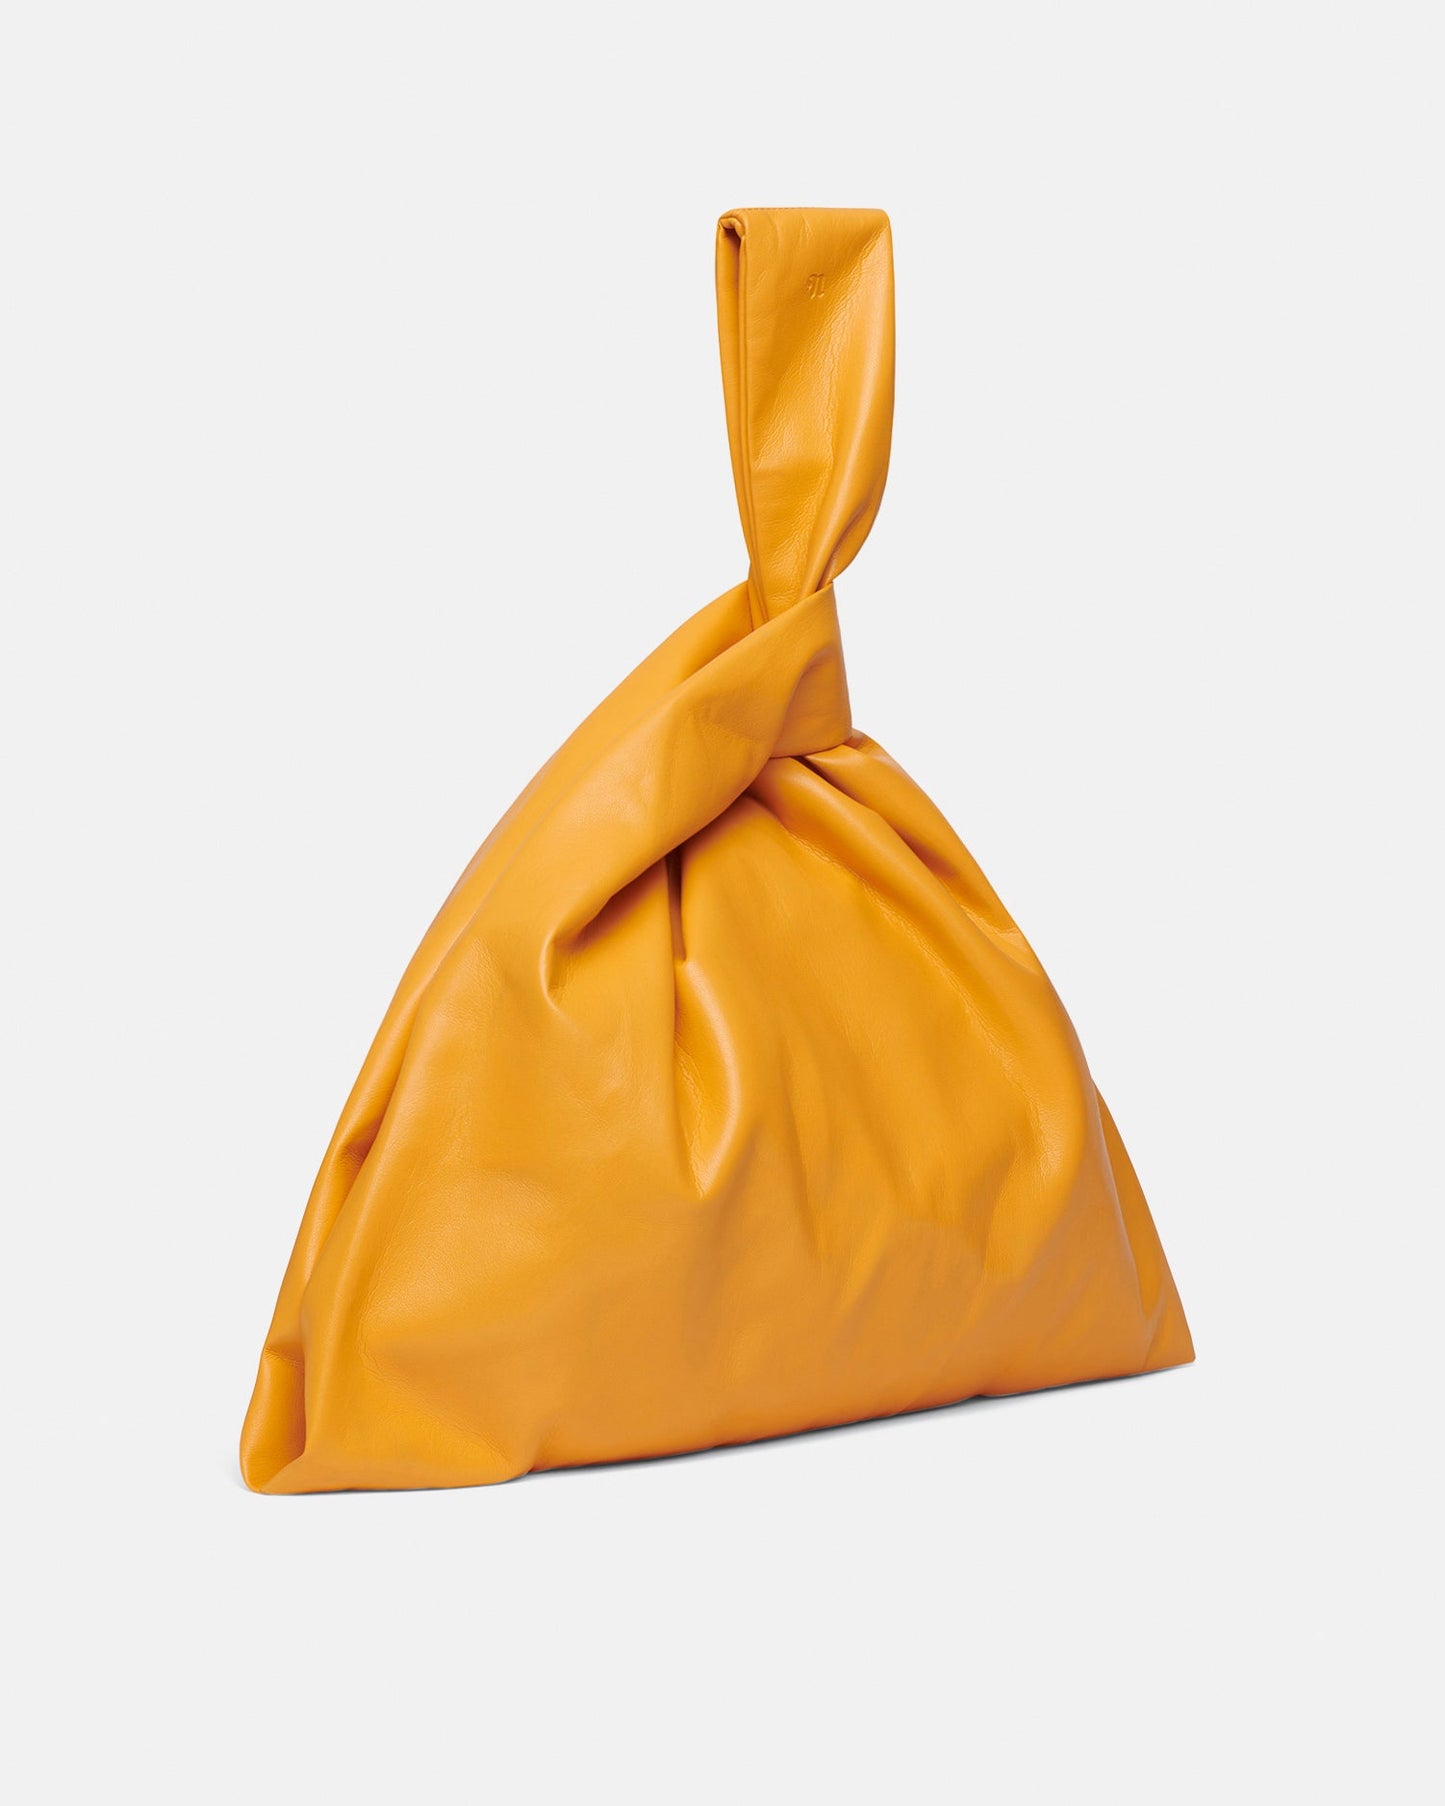 Jen Large - Okobor™ Alt-Leather Clutch Bag - Orange Pf23